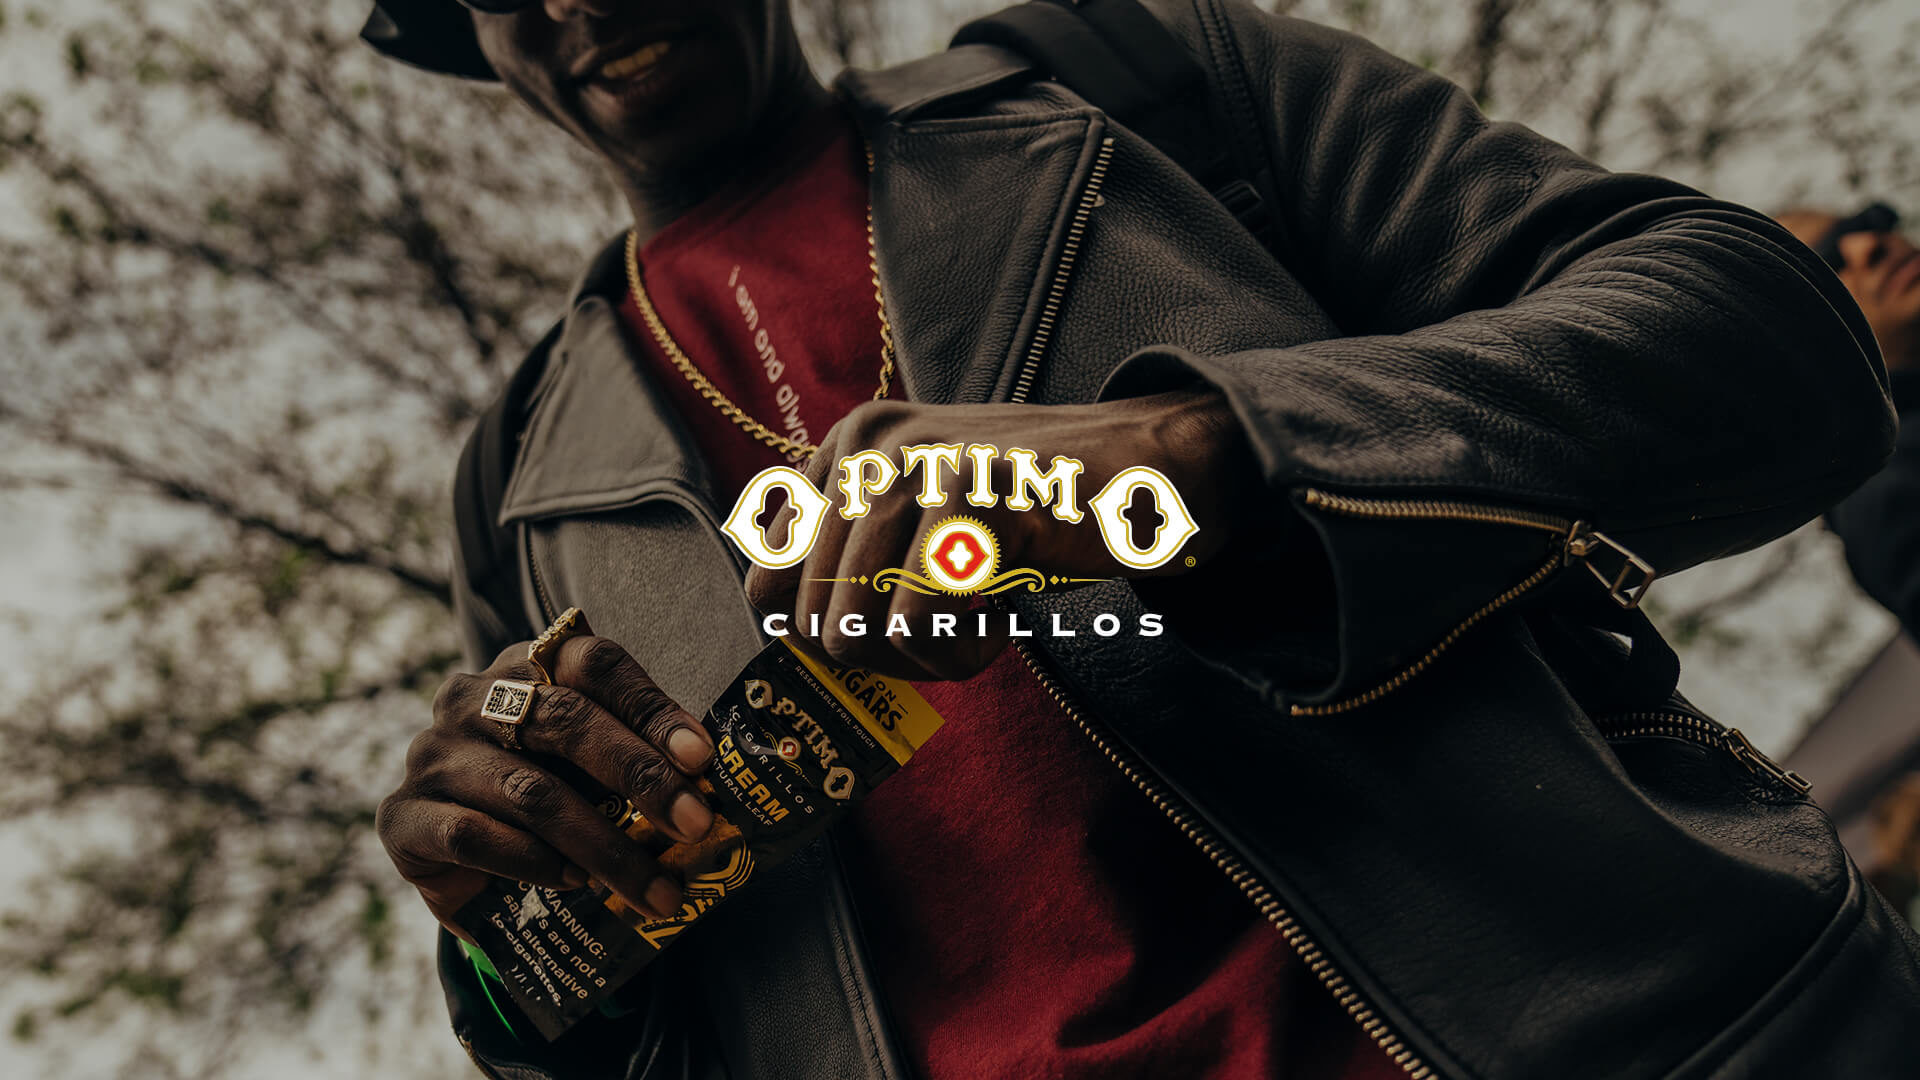 Optimo Cigars Website Design and Development